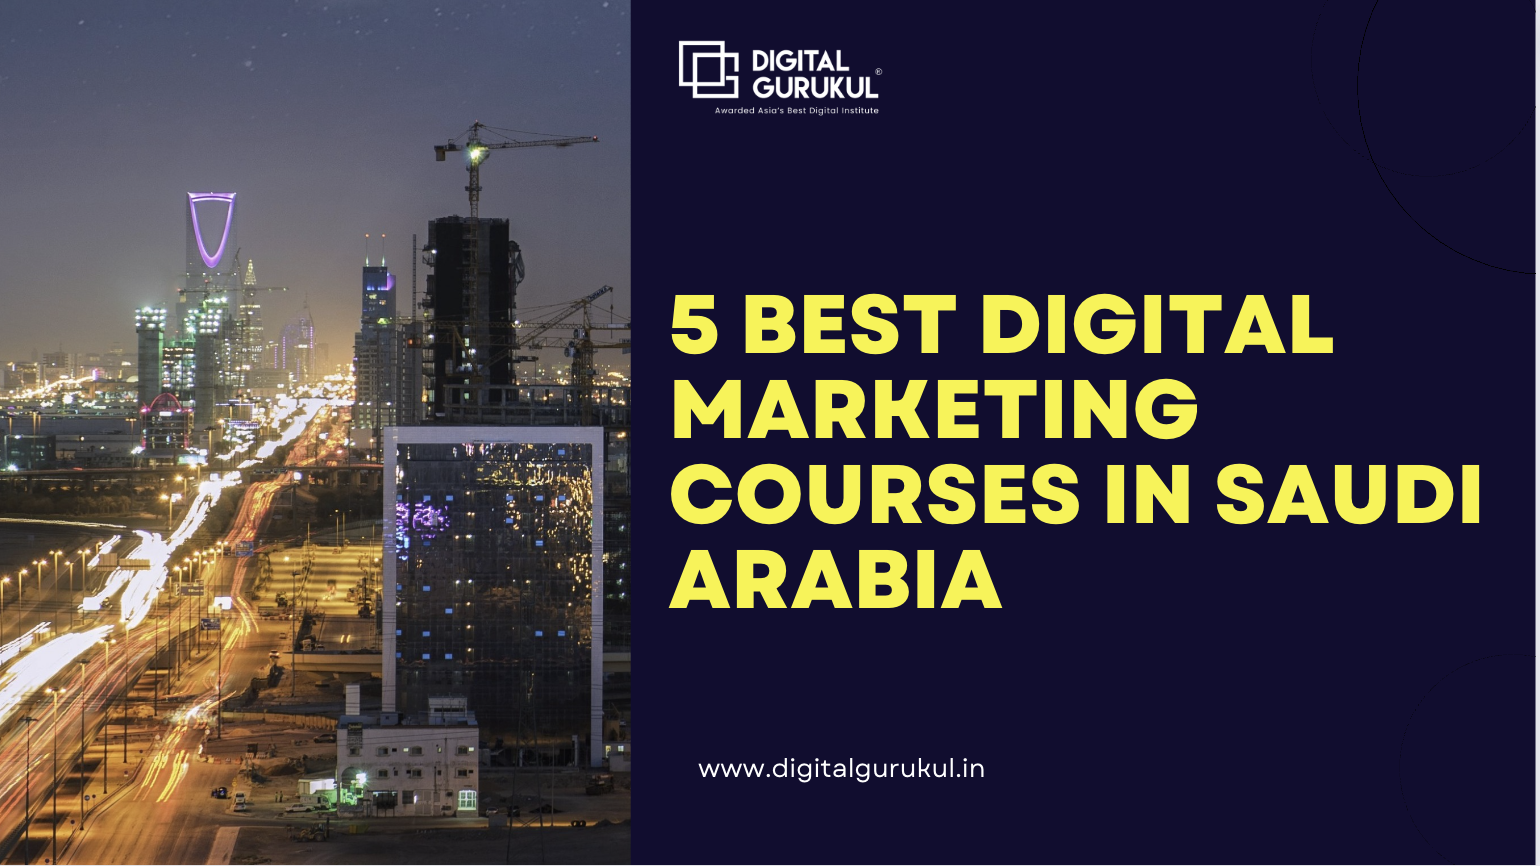 5 Best Digital Marketing Courses in Saudi Arabia